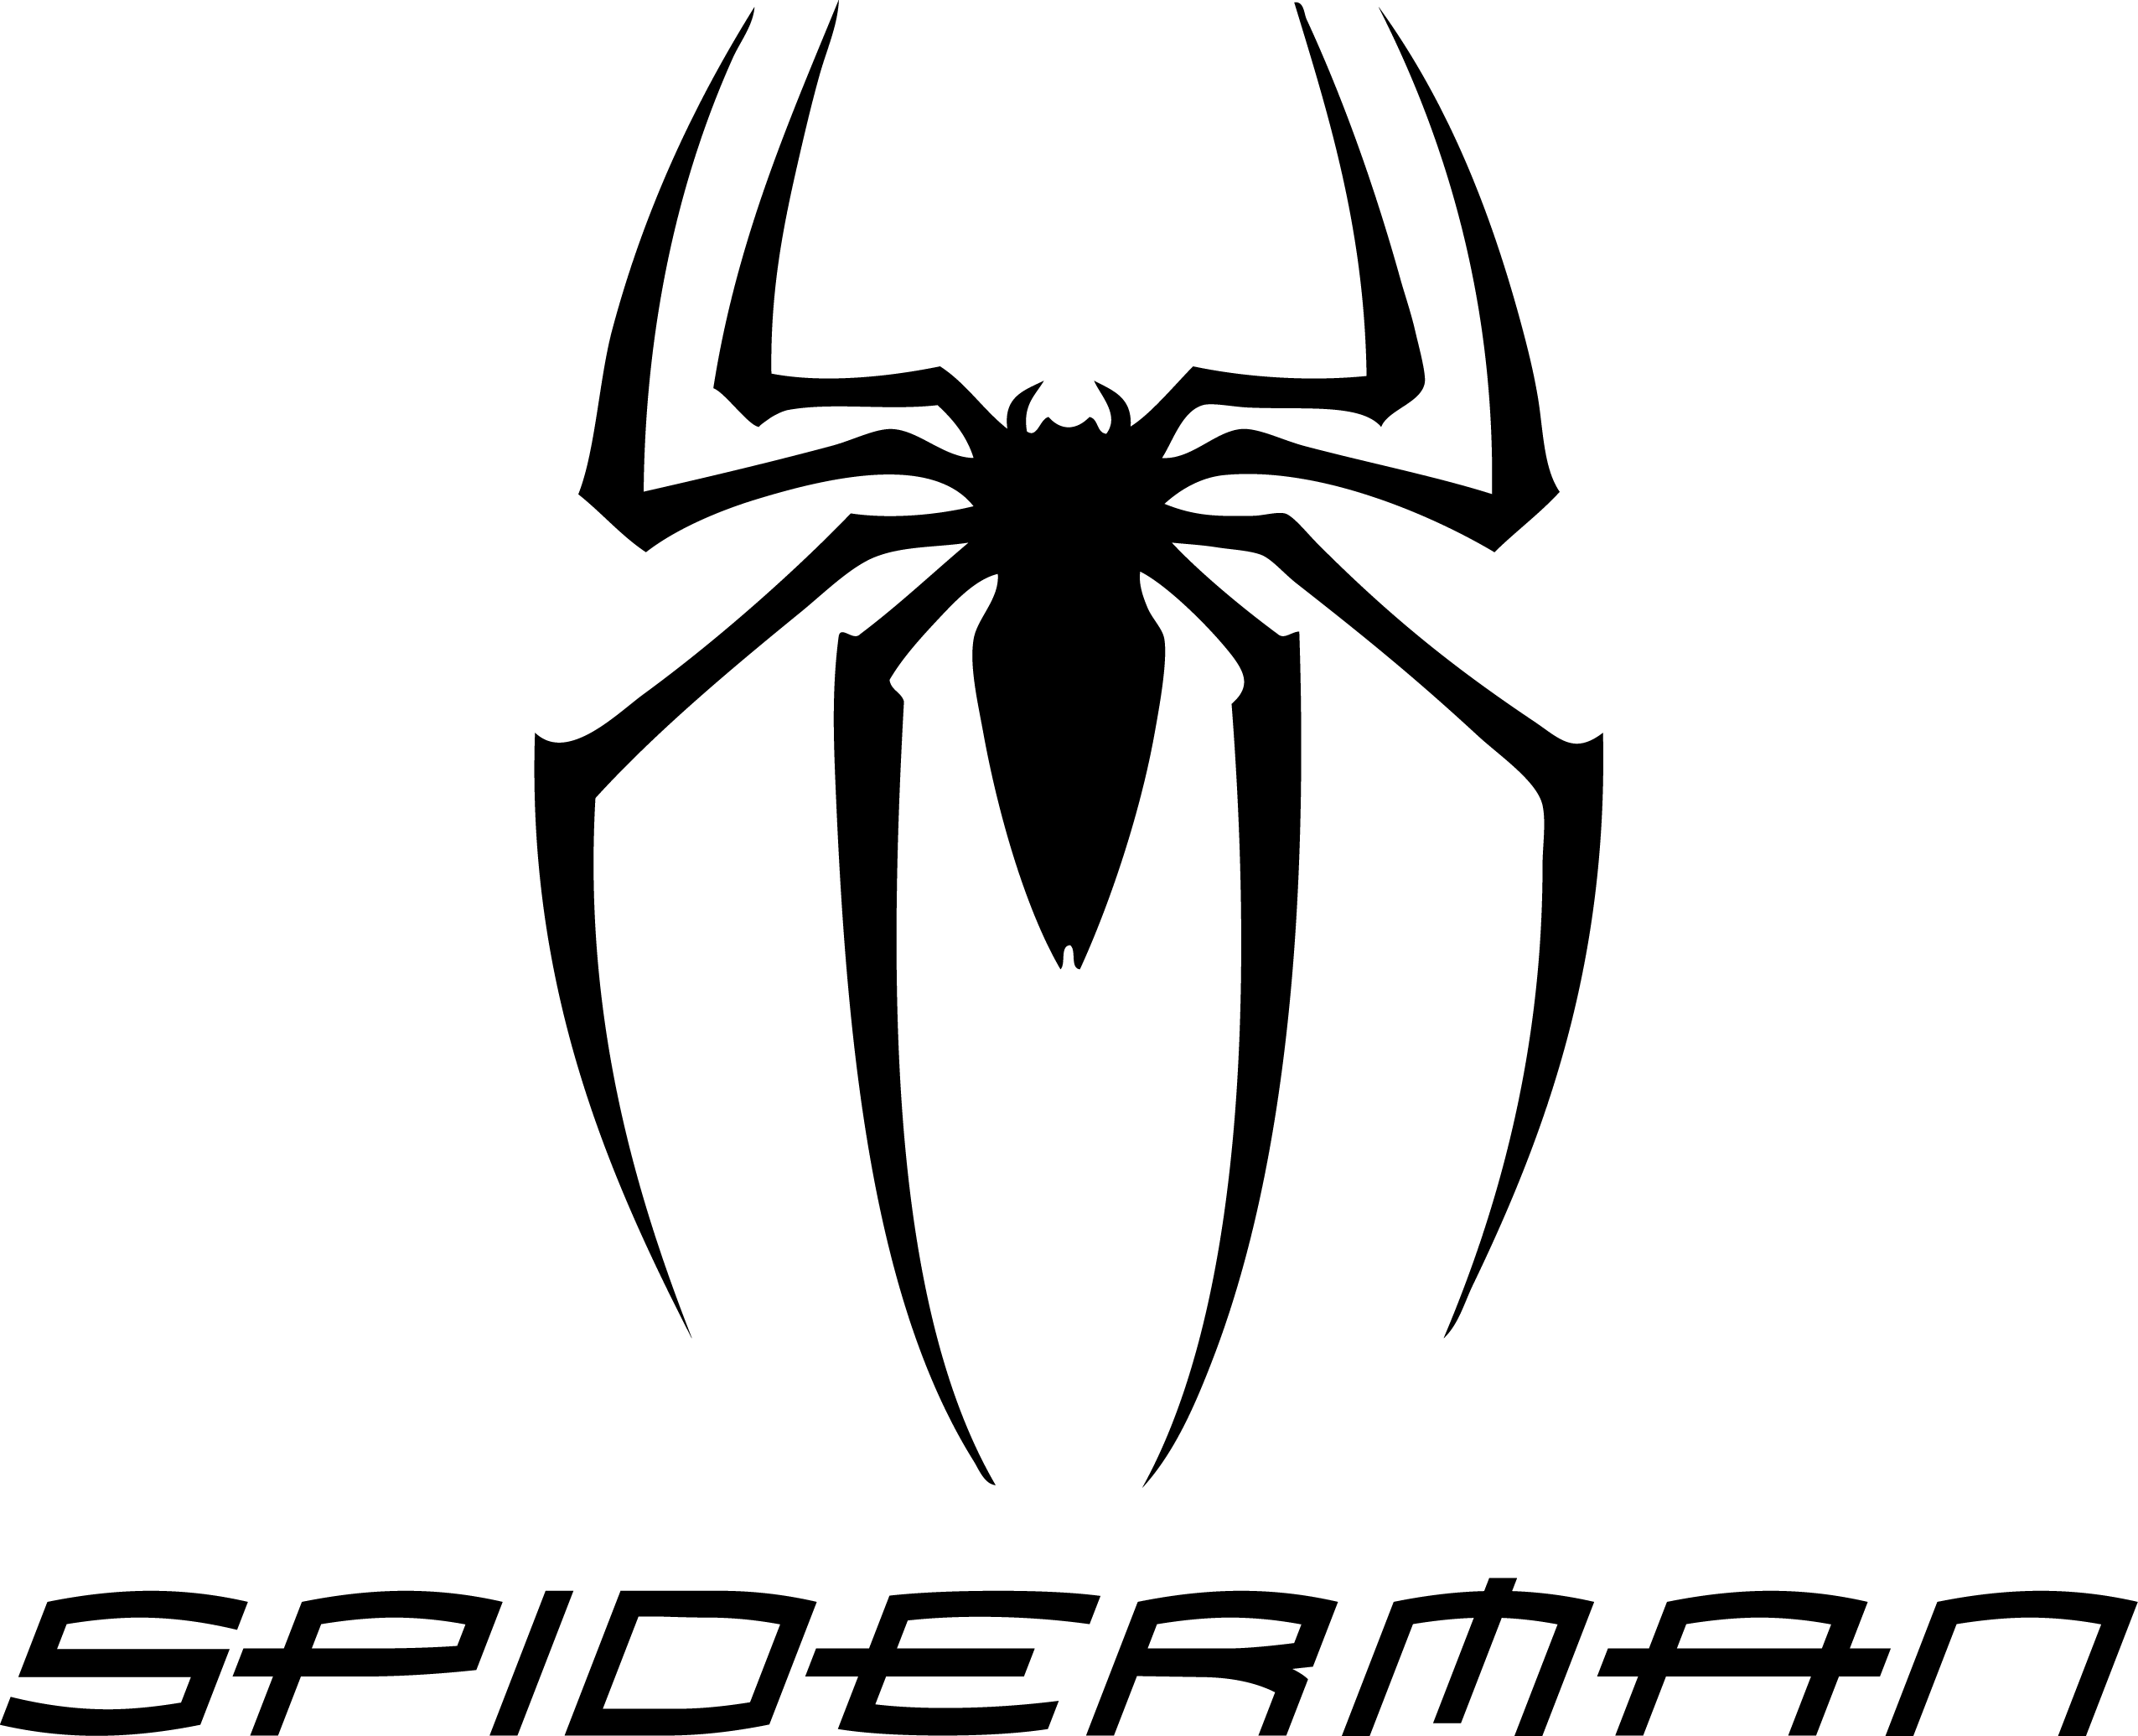 Spiderman Logo PNG